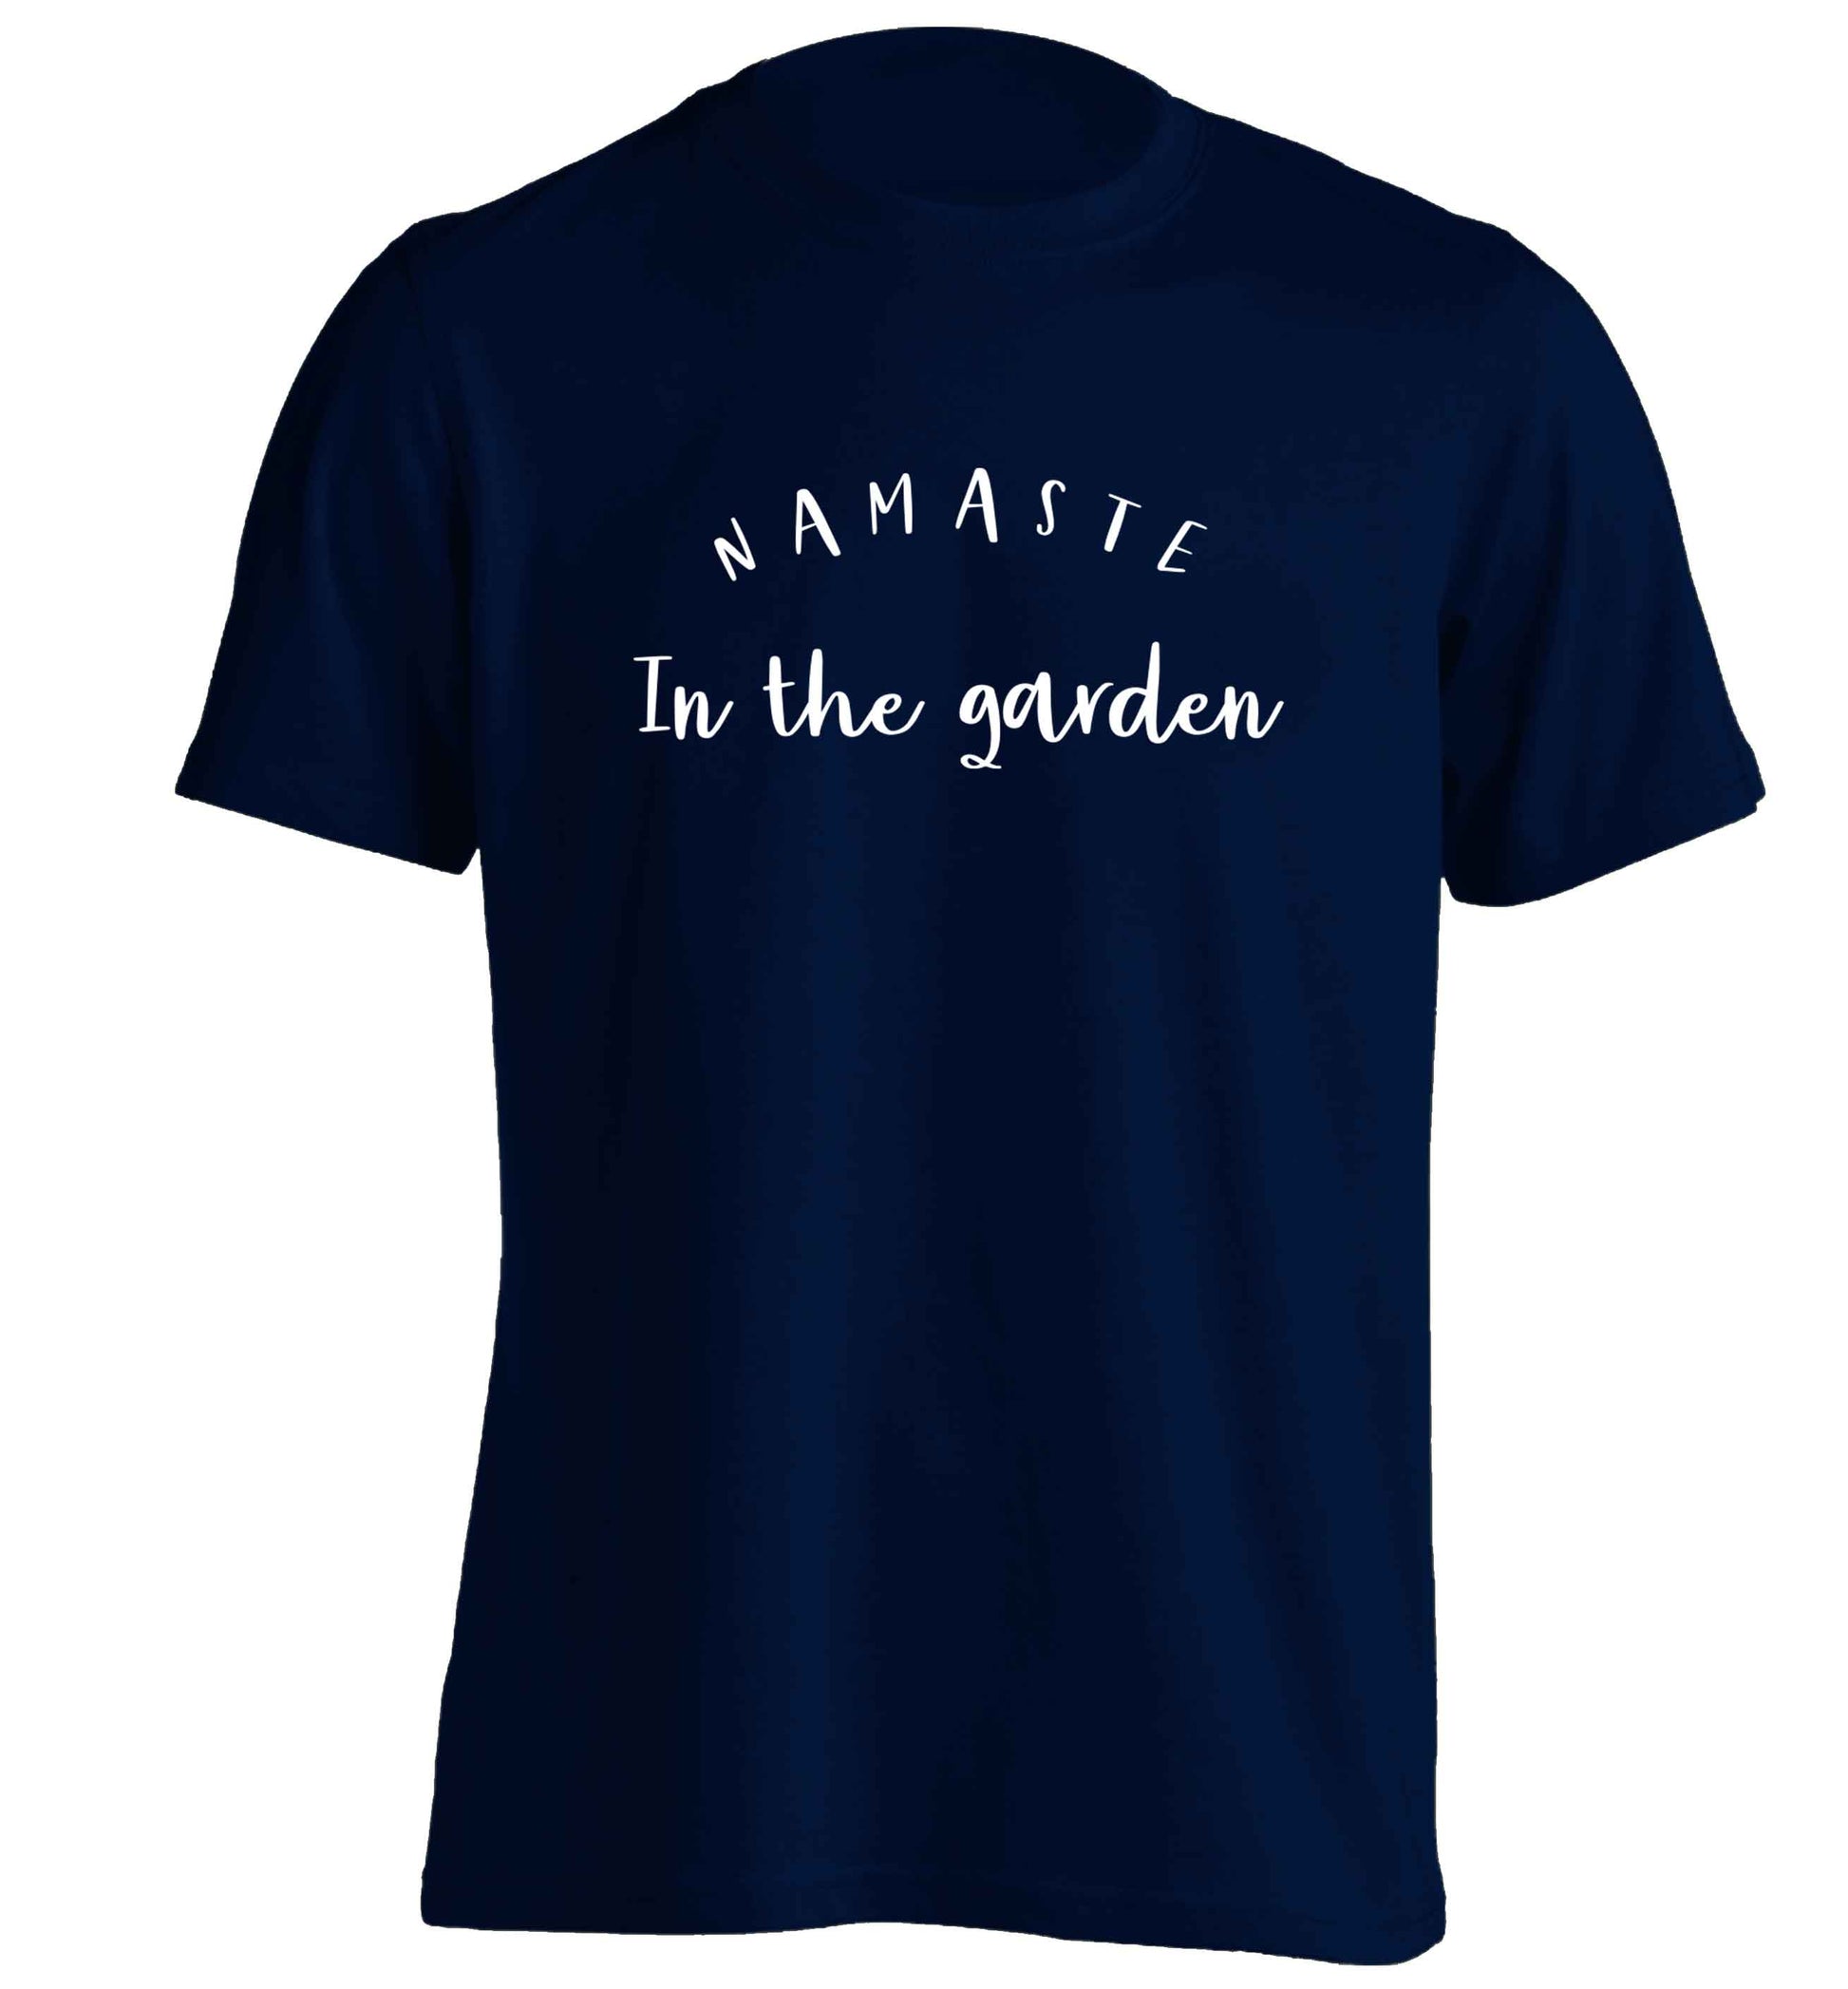 Namaste in the garden adults unisex navy Tshirt 2XL